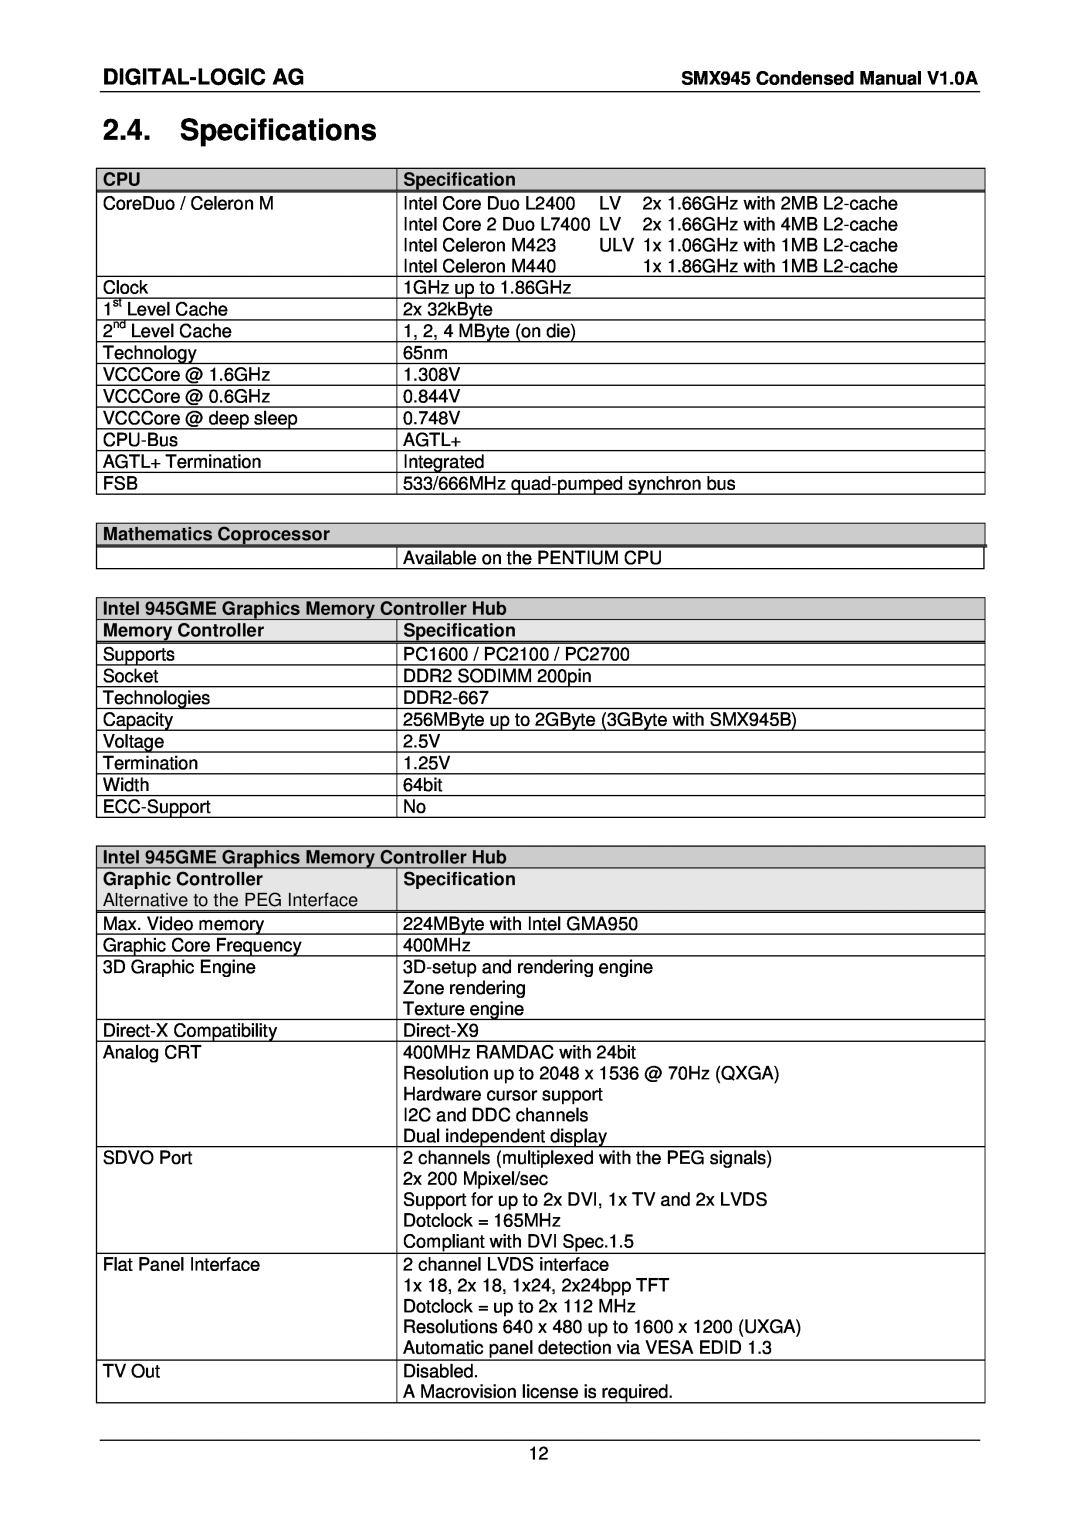 Compaq SMX945 user manual Specifications, Digital-Logic Ag 